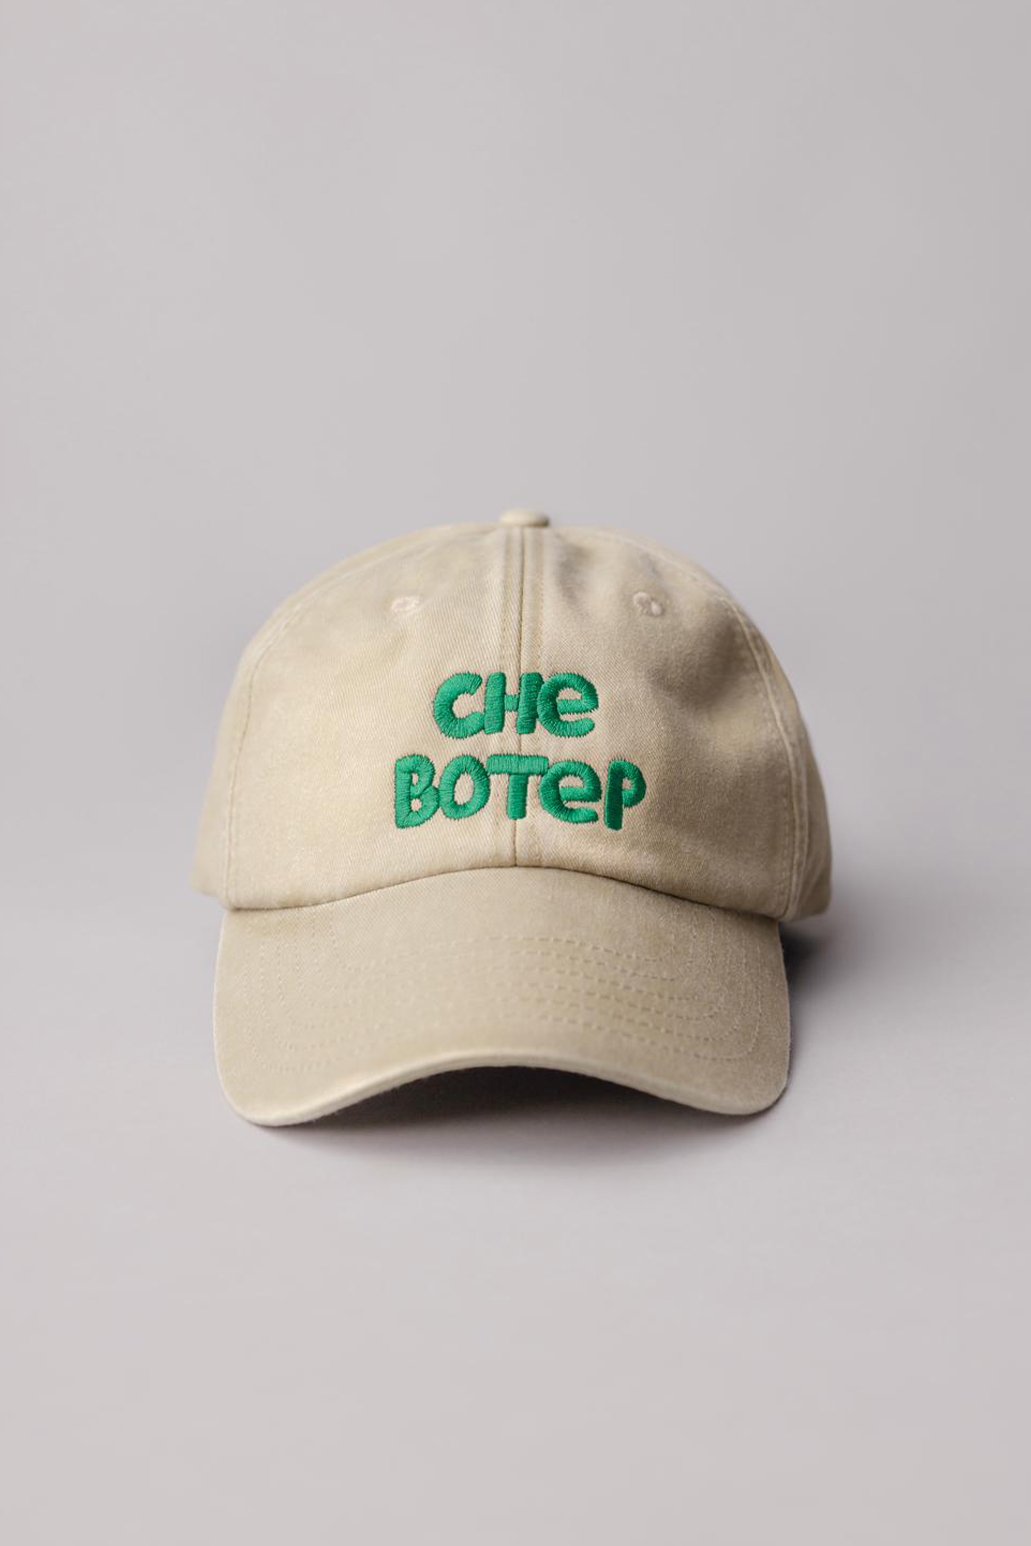 Che botèp – Hat